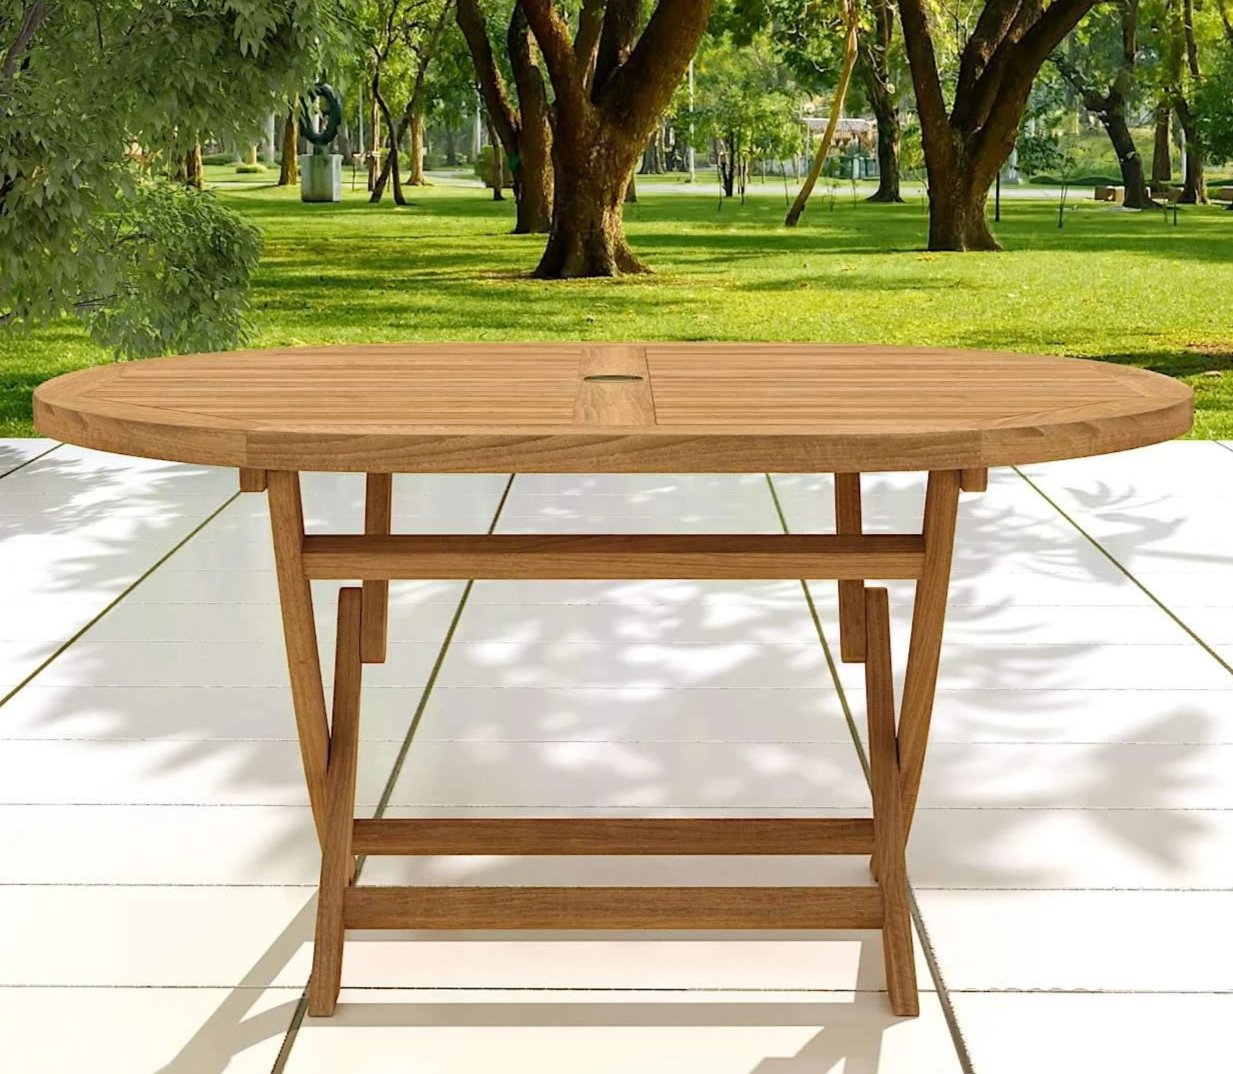 Oval Folding Teak Garden Table 4-6 Seater